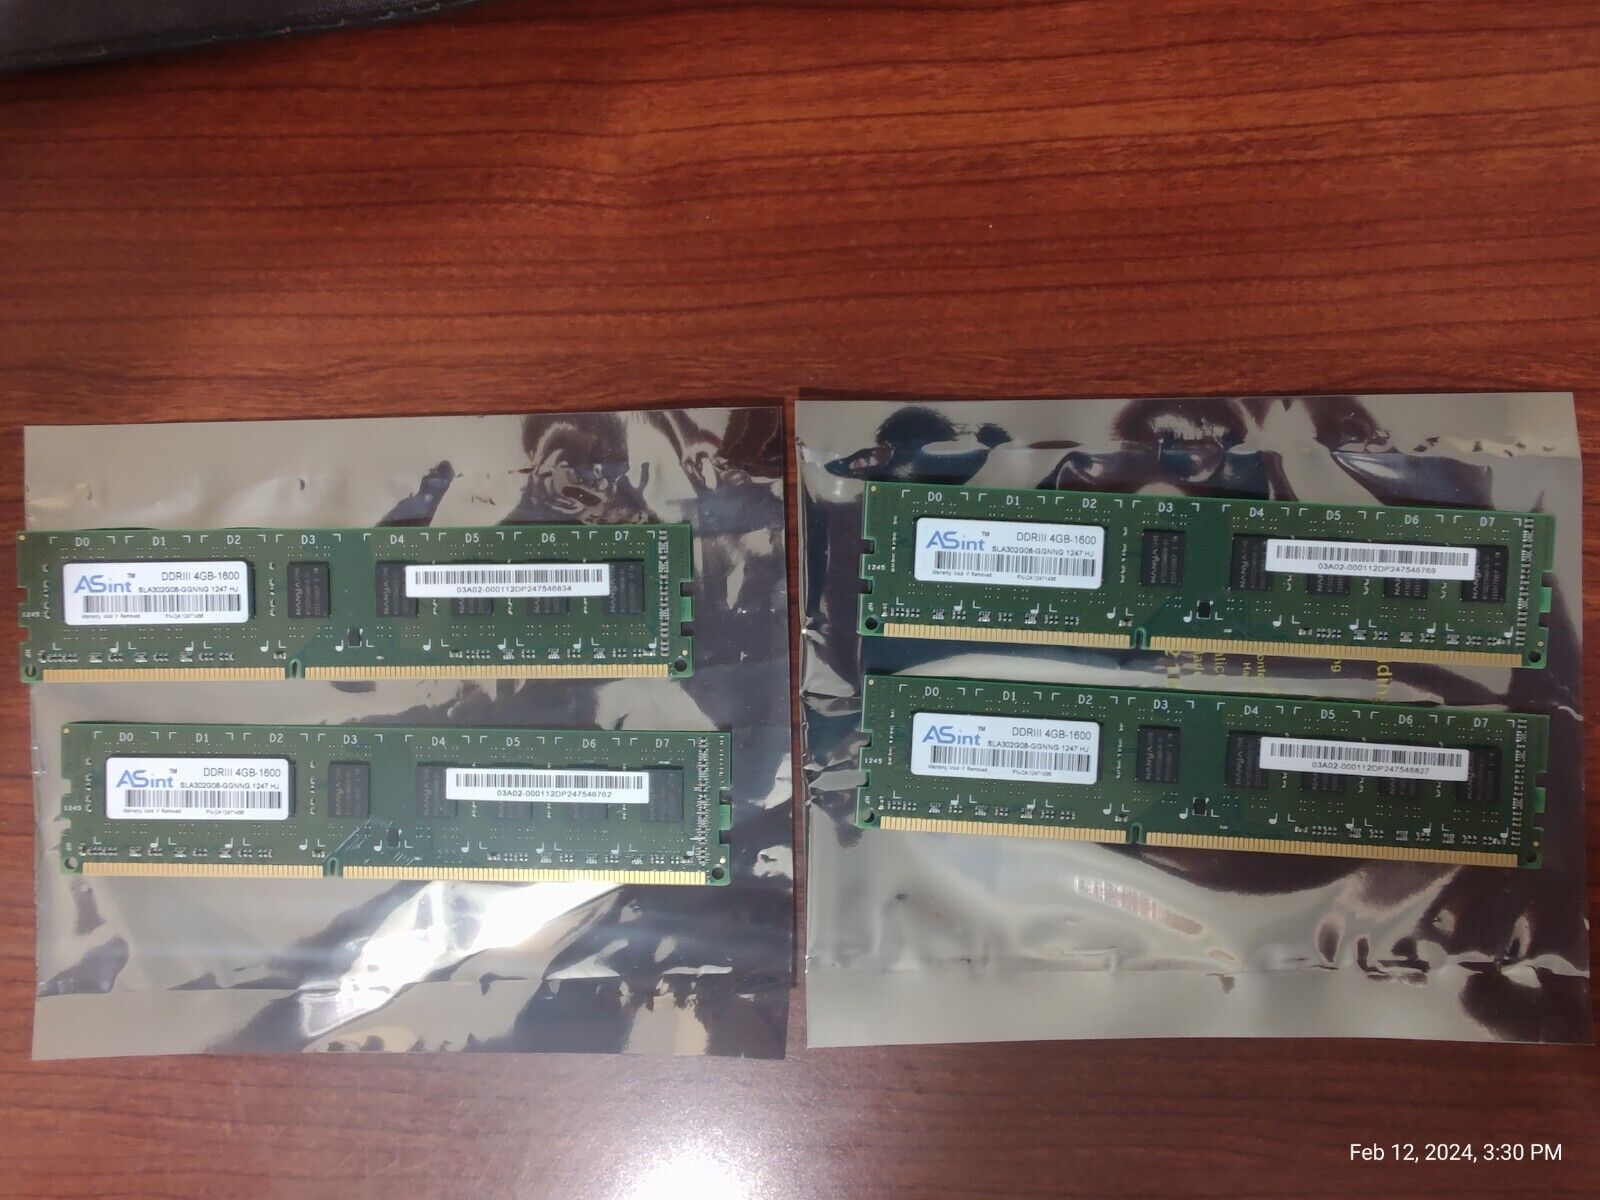 Four (4) sticks ASint 4GB-16 DDR3 RAM SLA302G08-GGNNG 1247 HJ (16GB RAM Total)